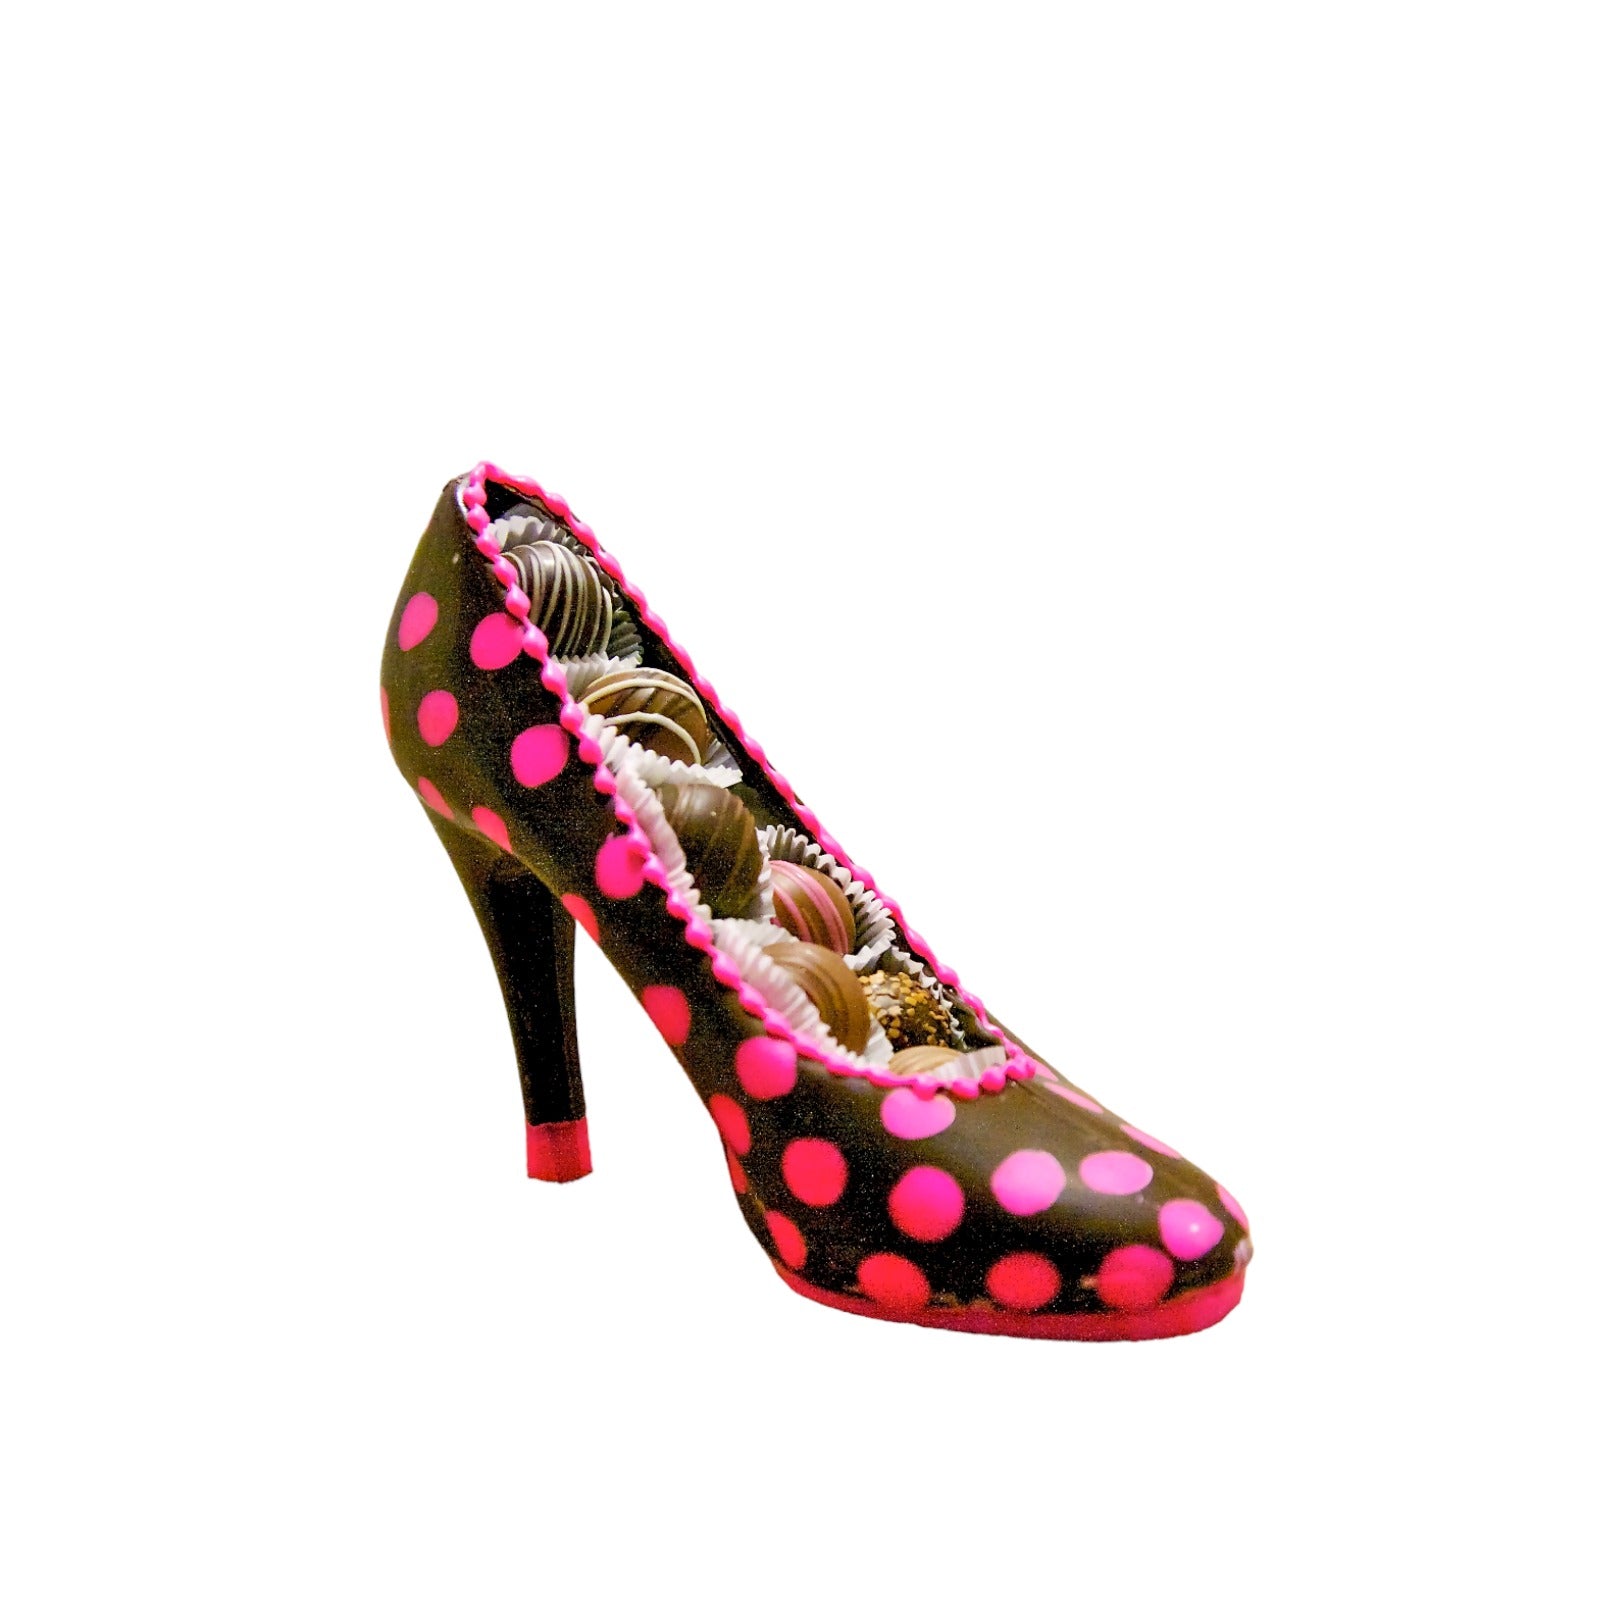 Pink and Red Polka Dot High Heel Shoe